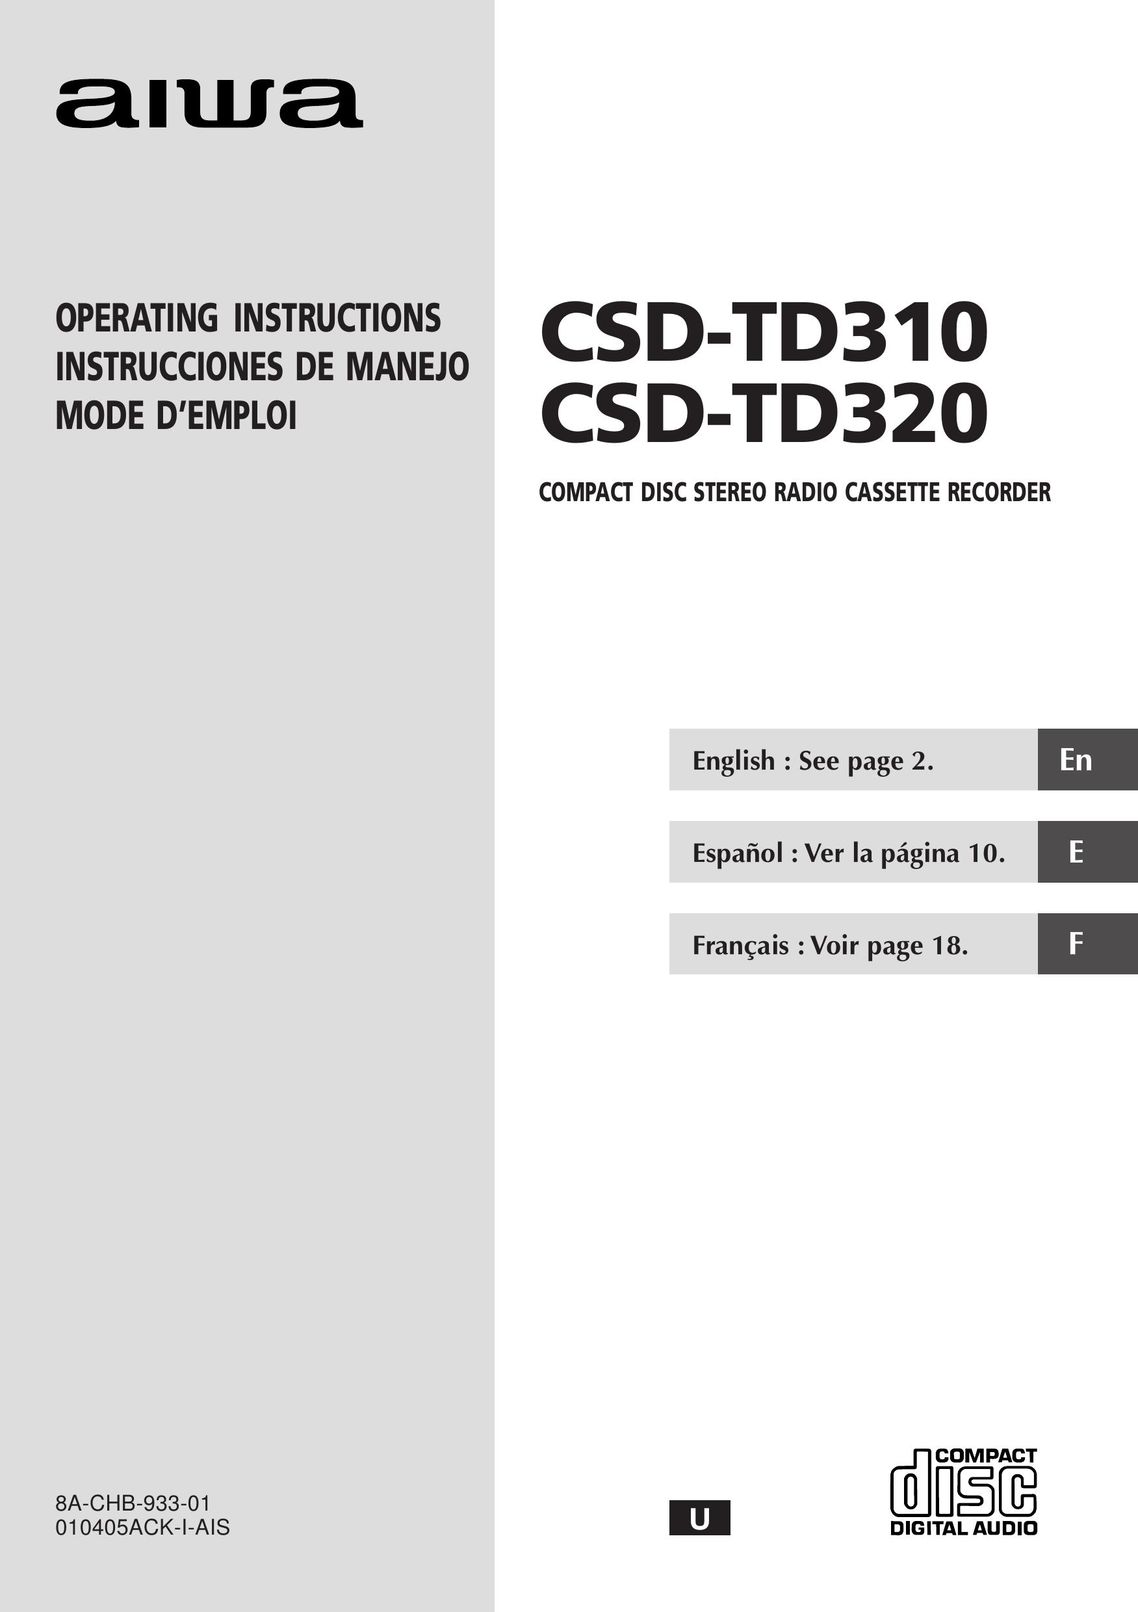 Aiwa CSD-TD320 Car Stereo System User Manual